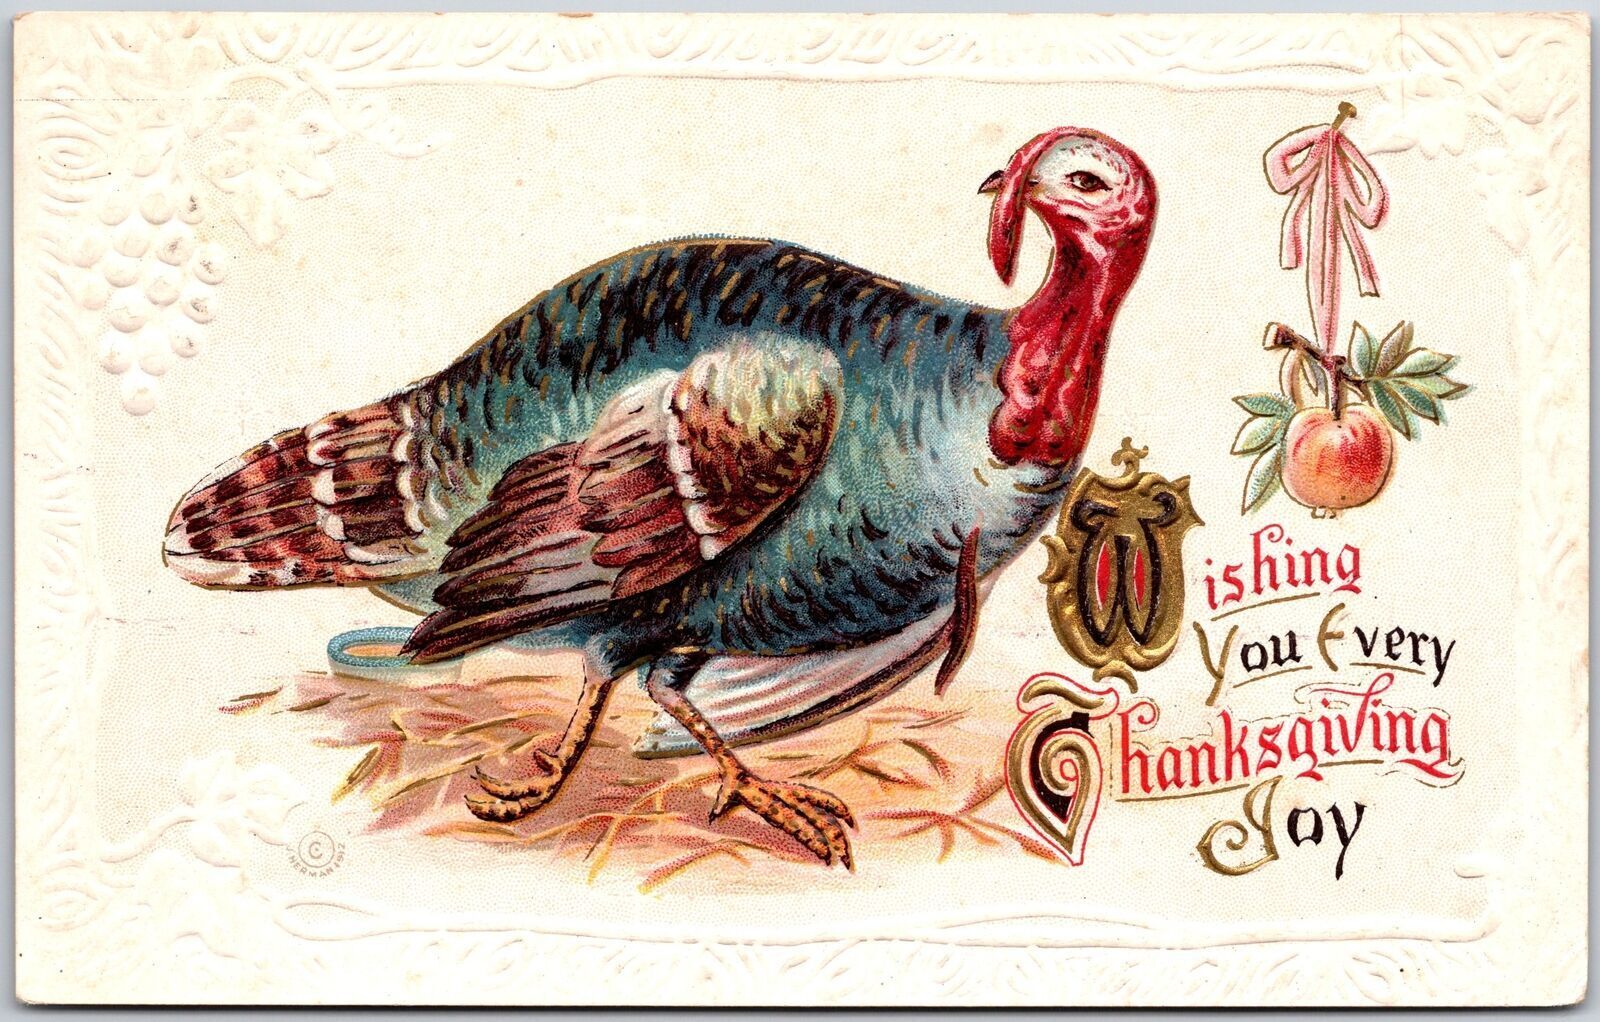 1912 Wishing You Very Thanksgiving Joy Embossed Turkey Greetings Posted Postcard